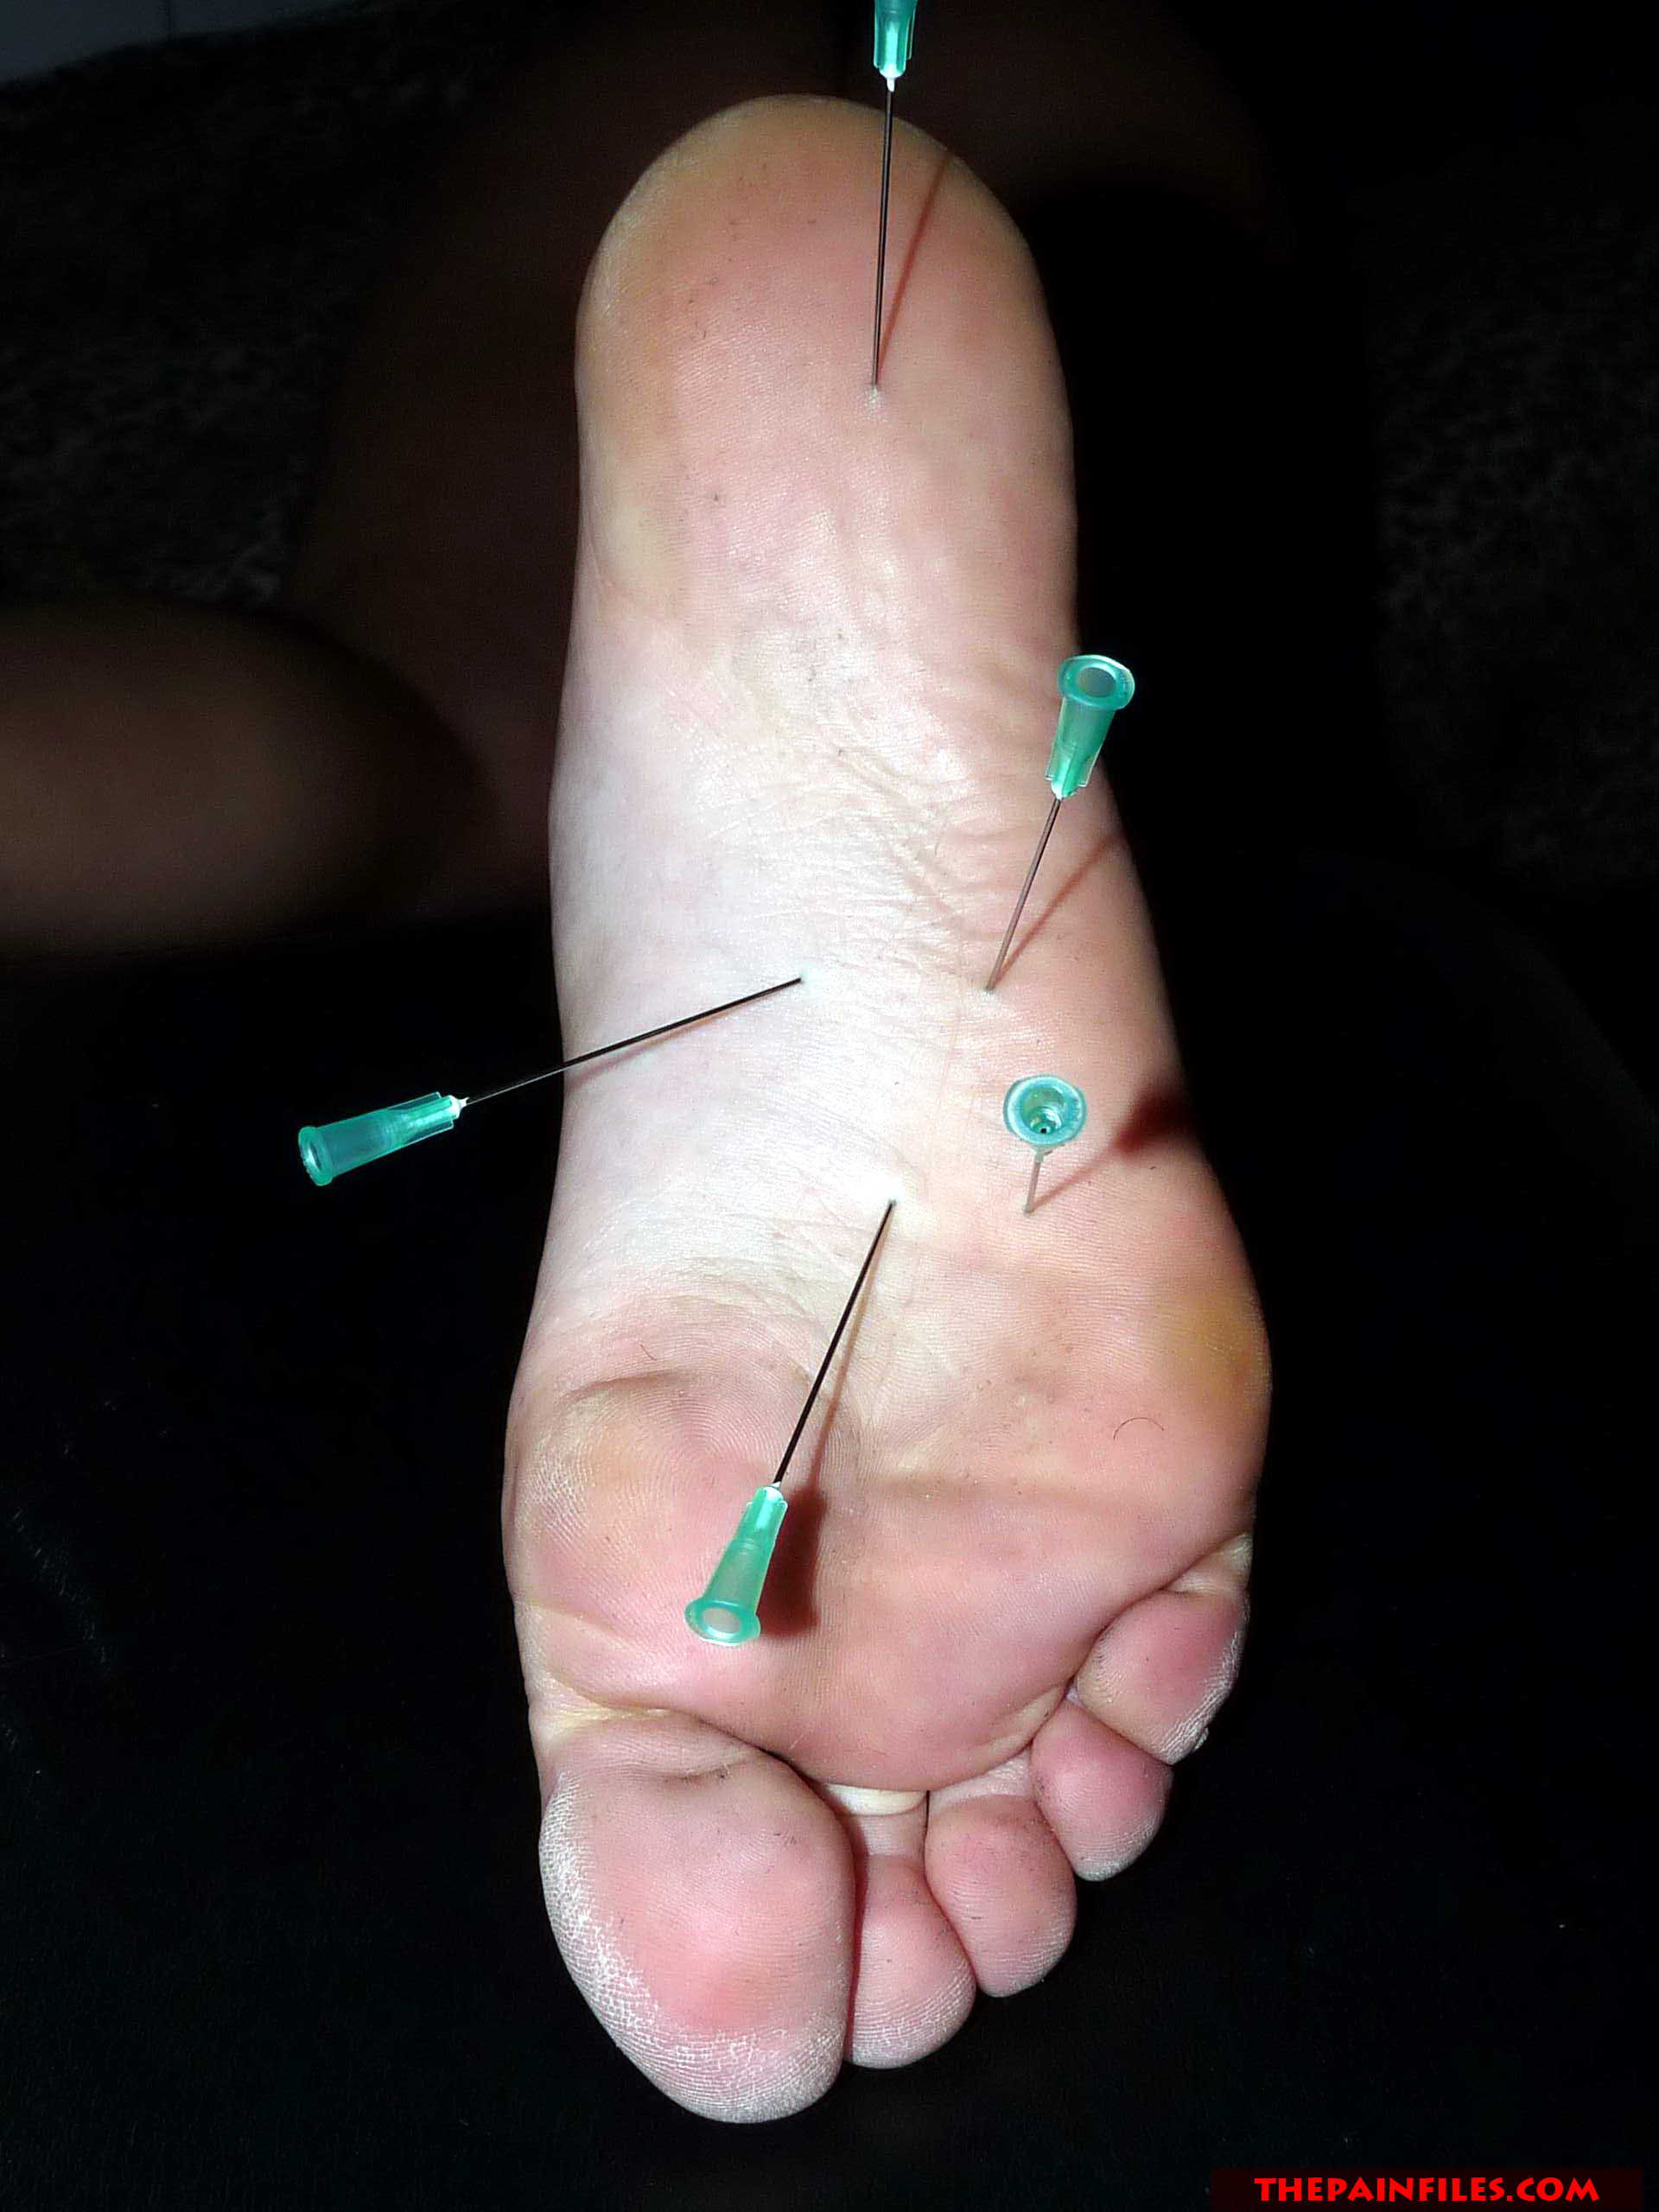 best of Feet needle